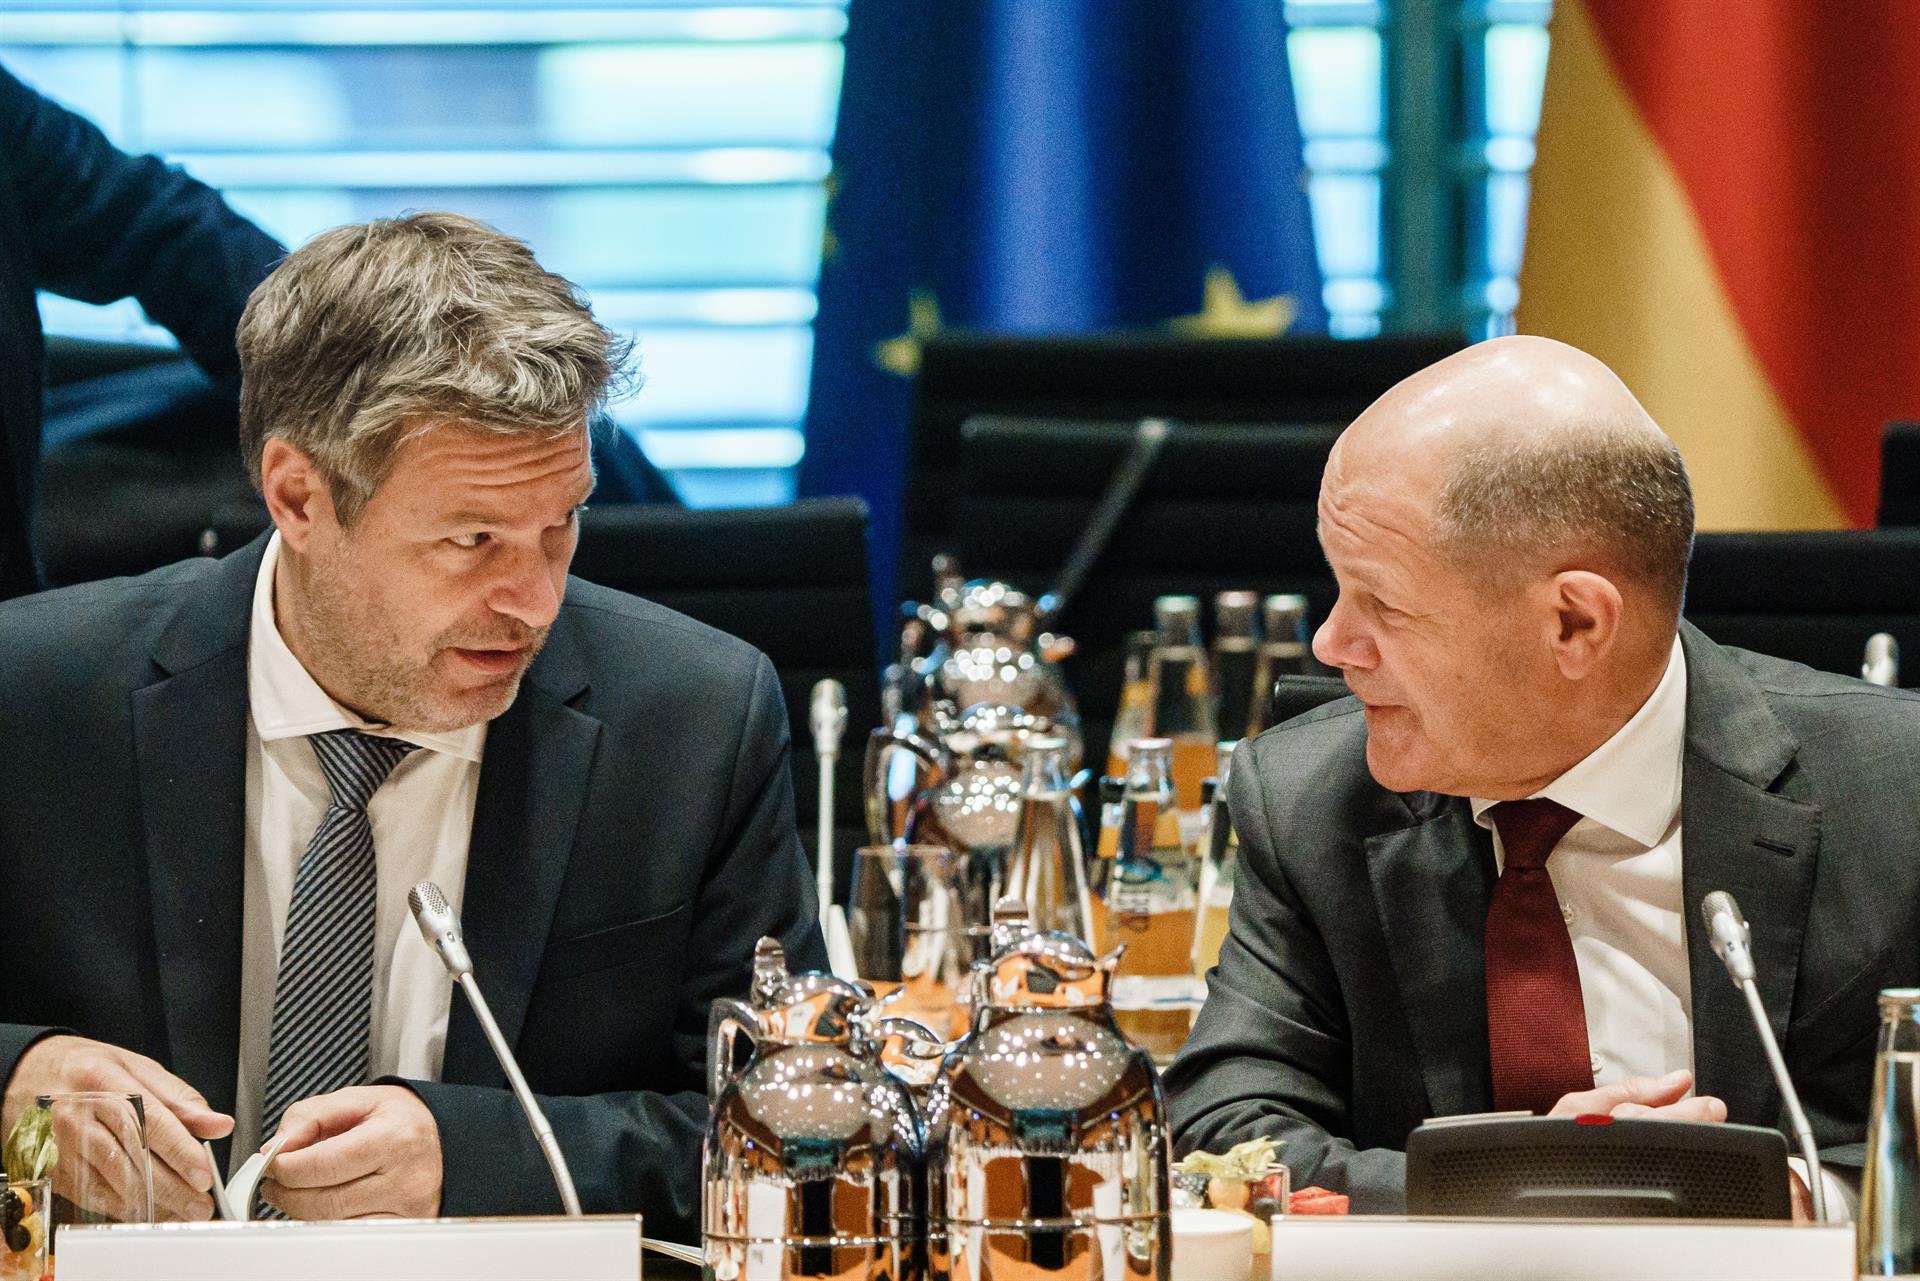 ministre economia robert Habeck canciller alemania olaf scholz